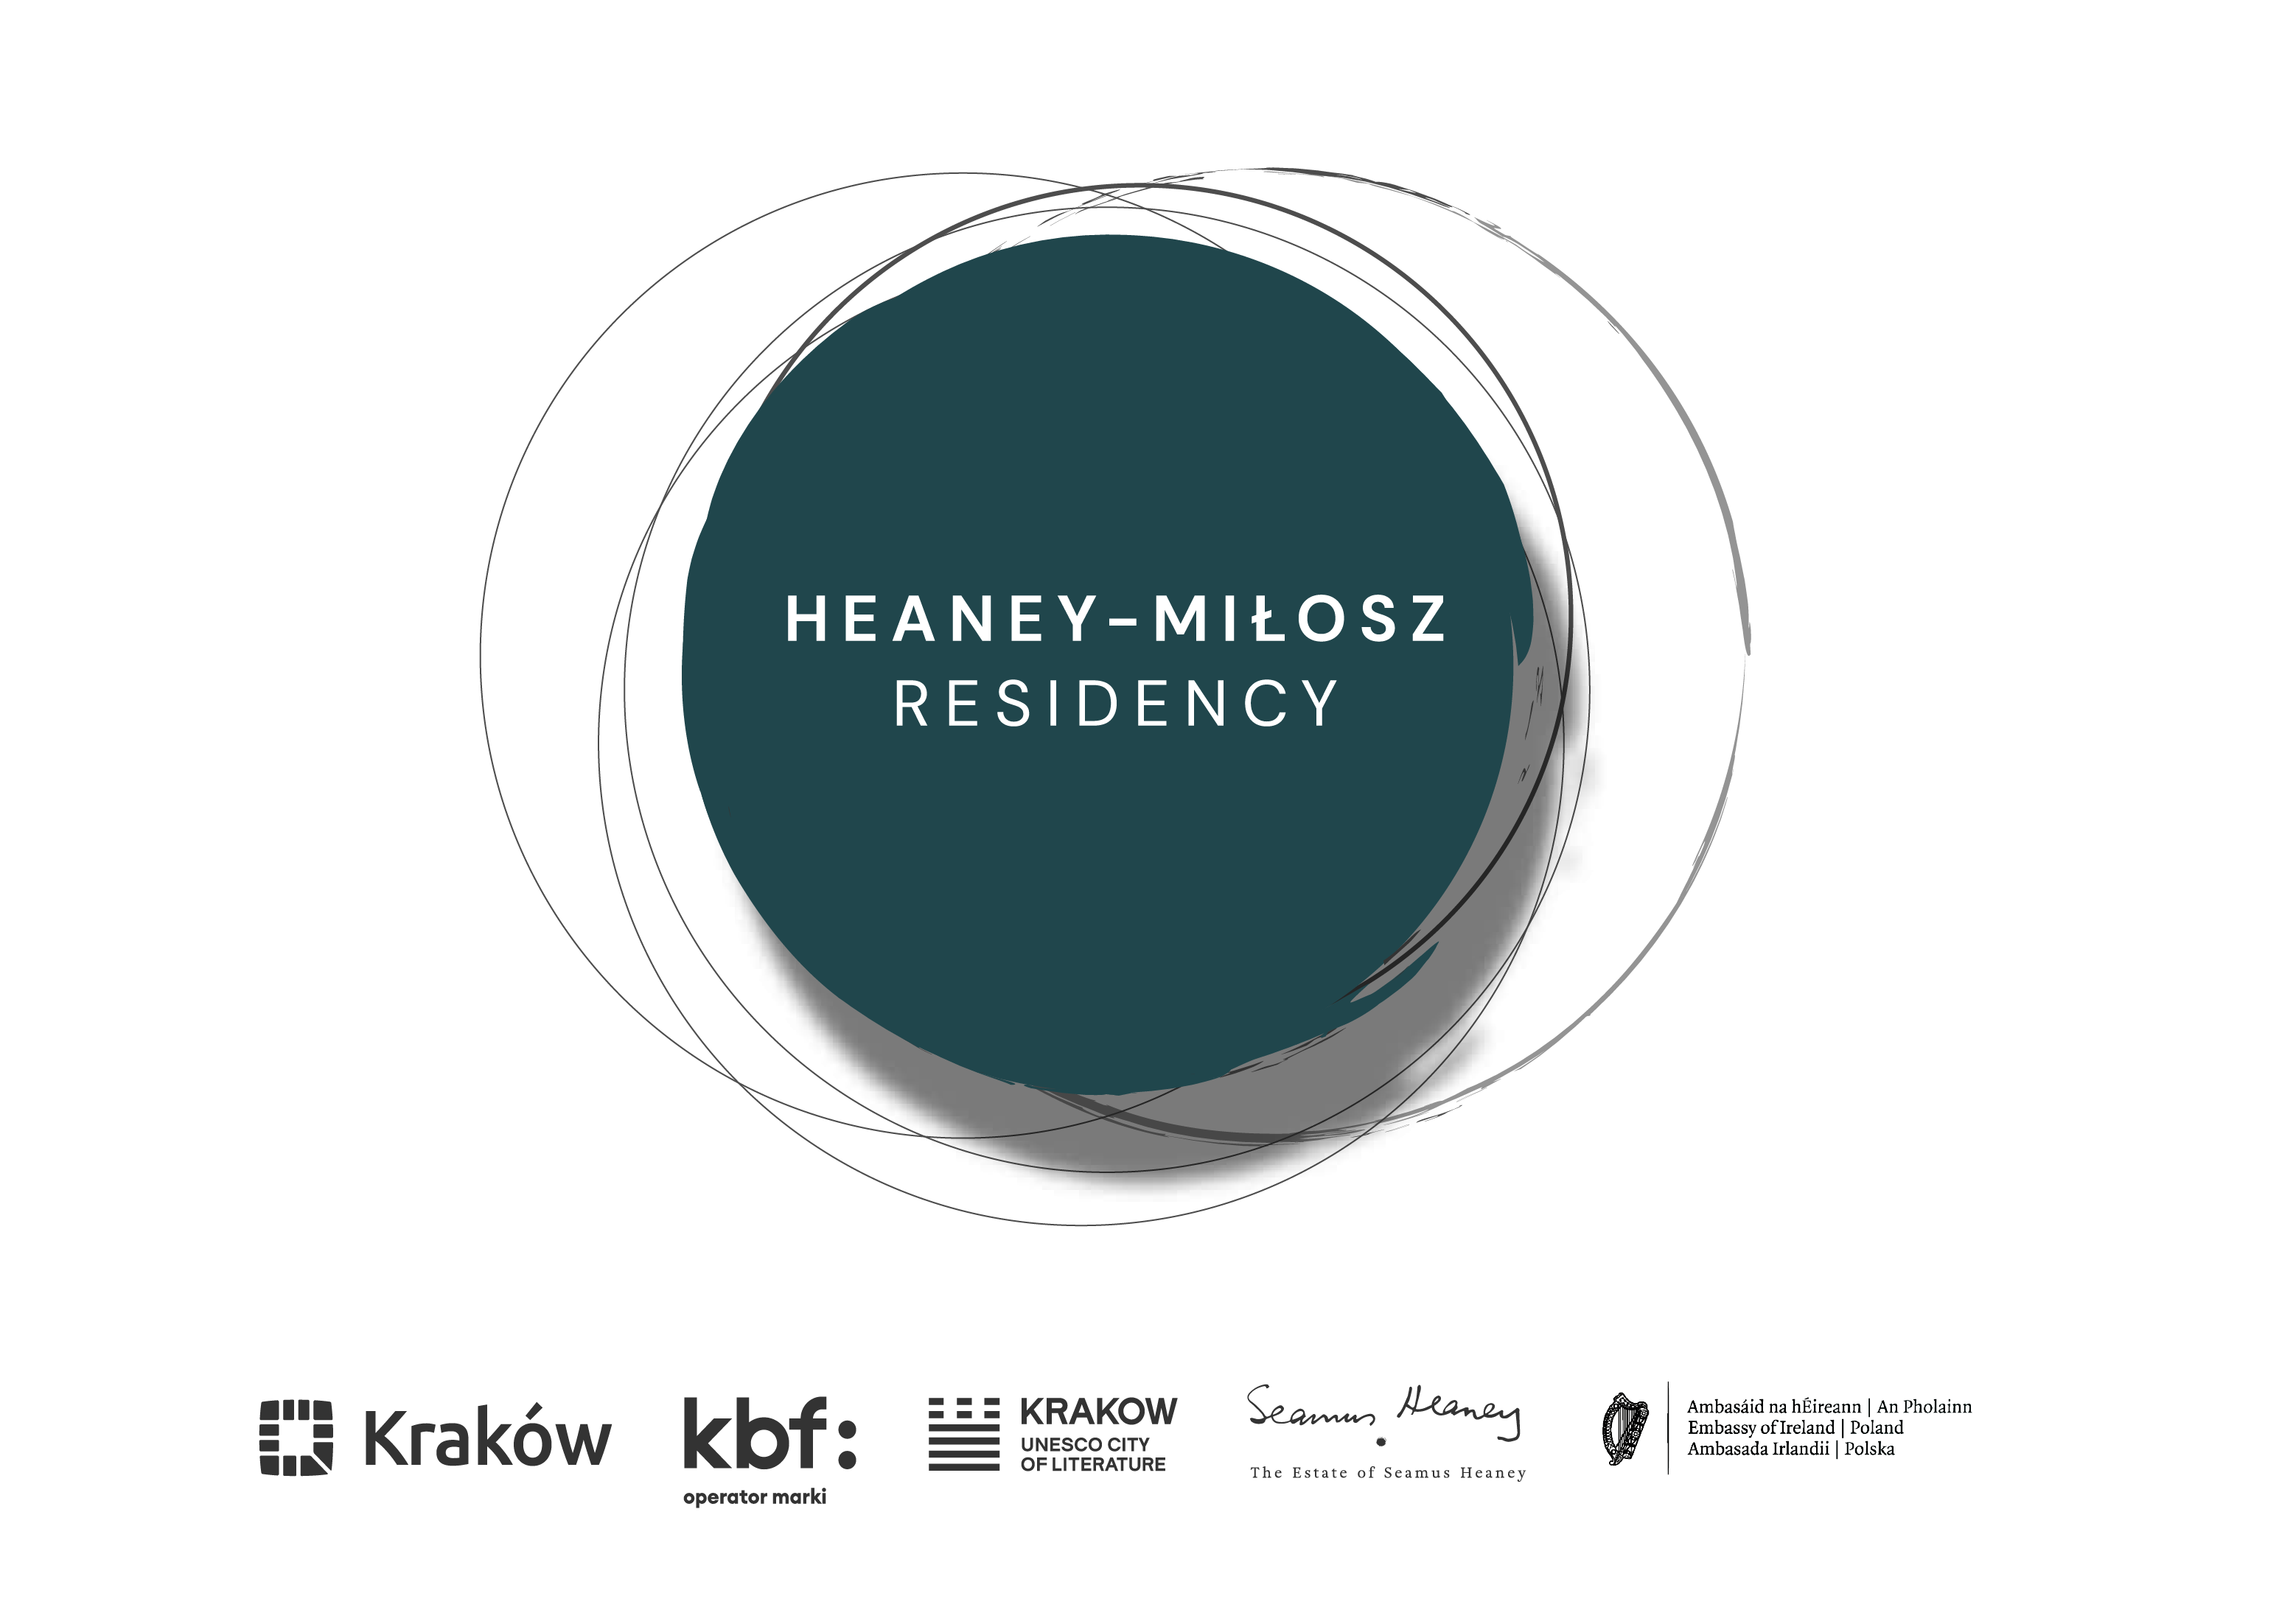 Launch of Heaney-Miłosz Literary Residency in Krakow